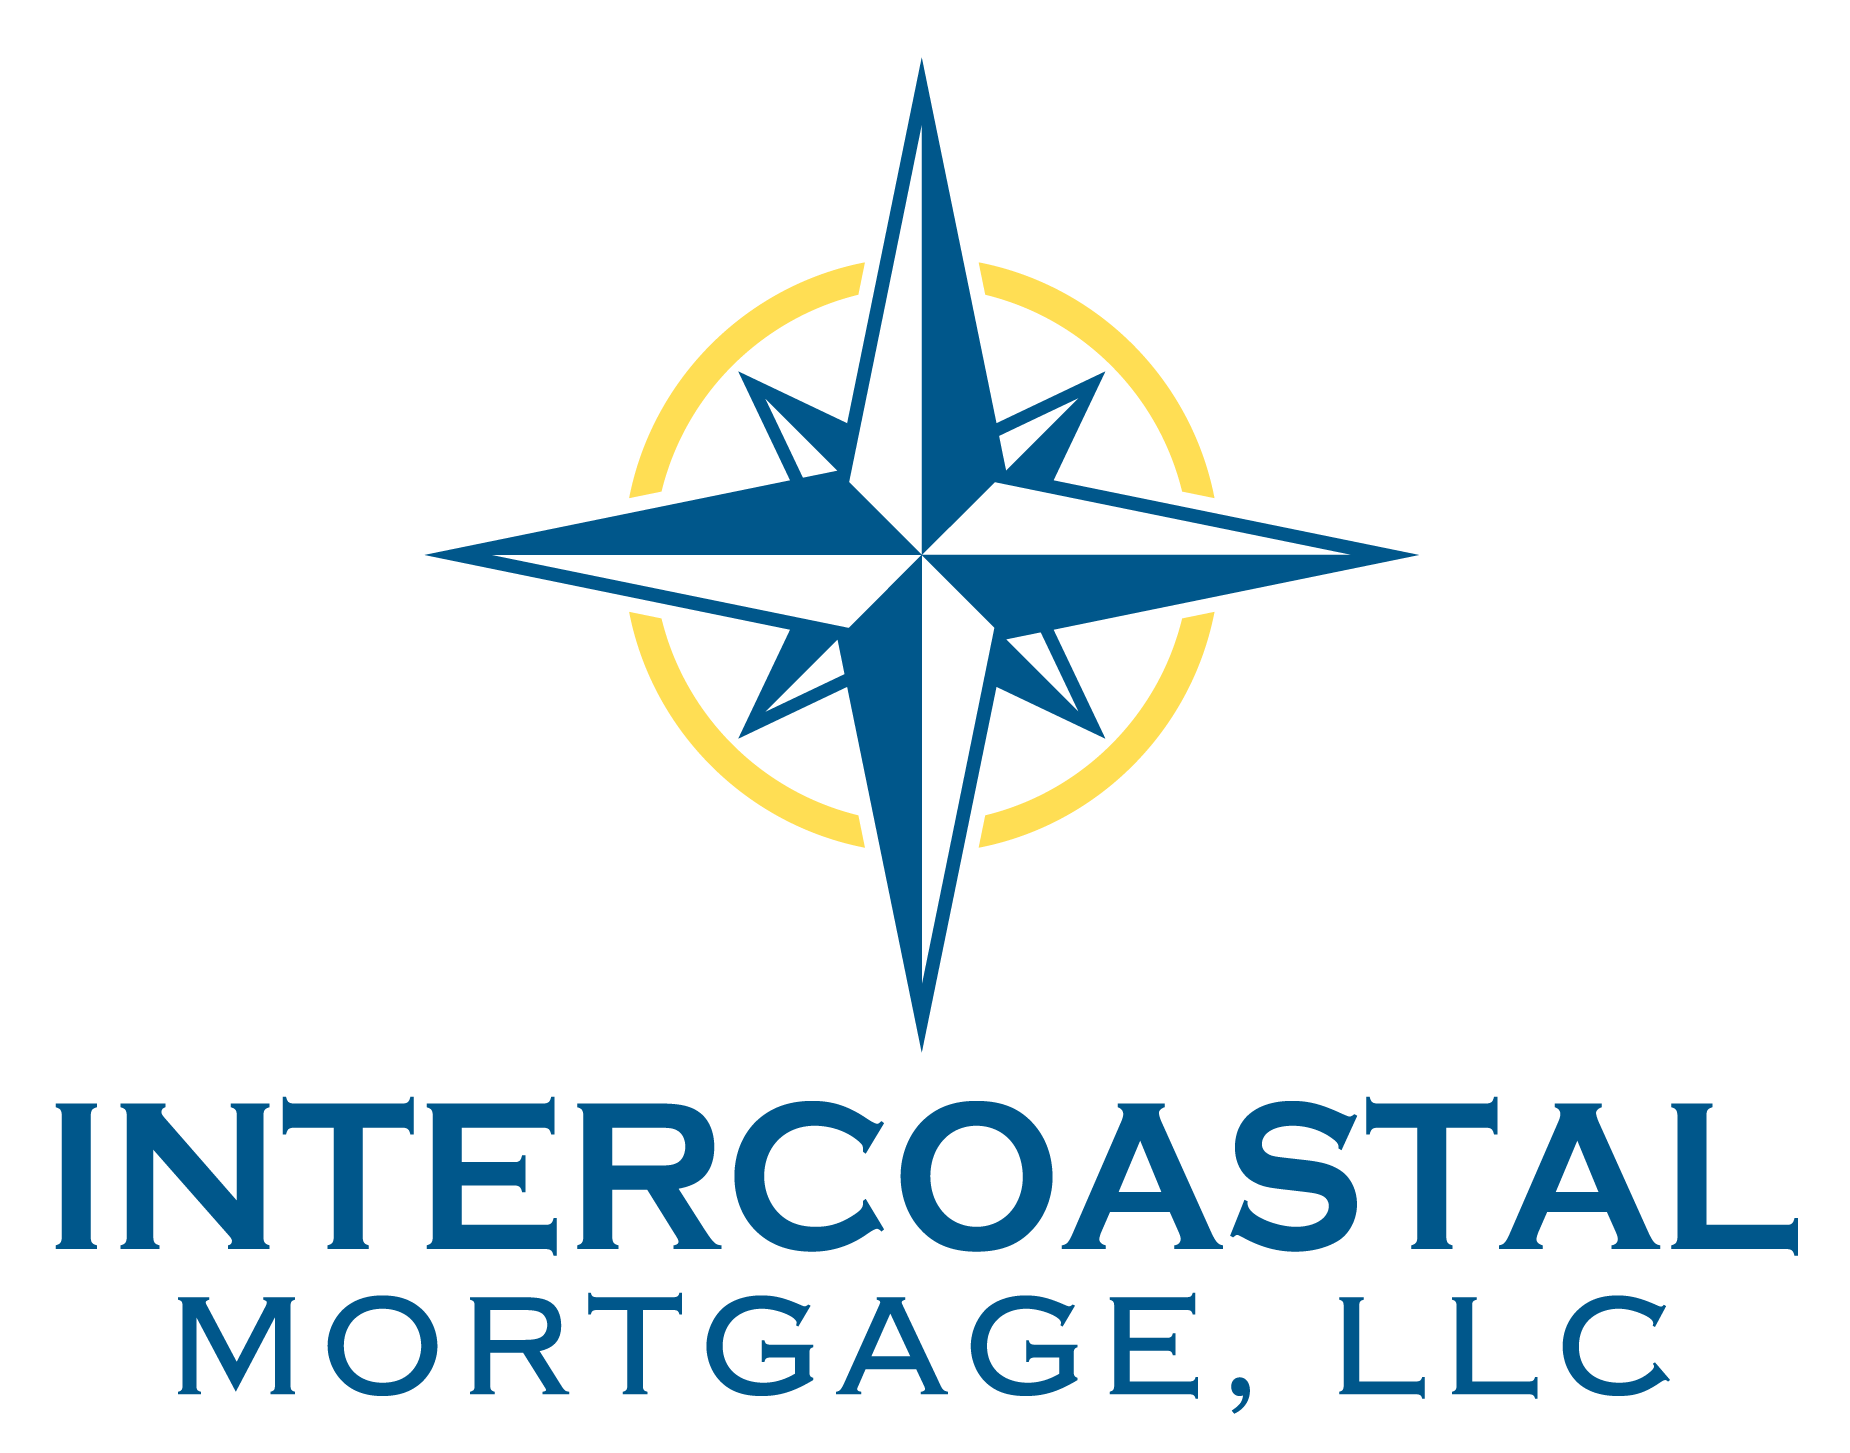 Intercoastal Mortgage, LLC Company Logo